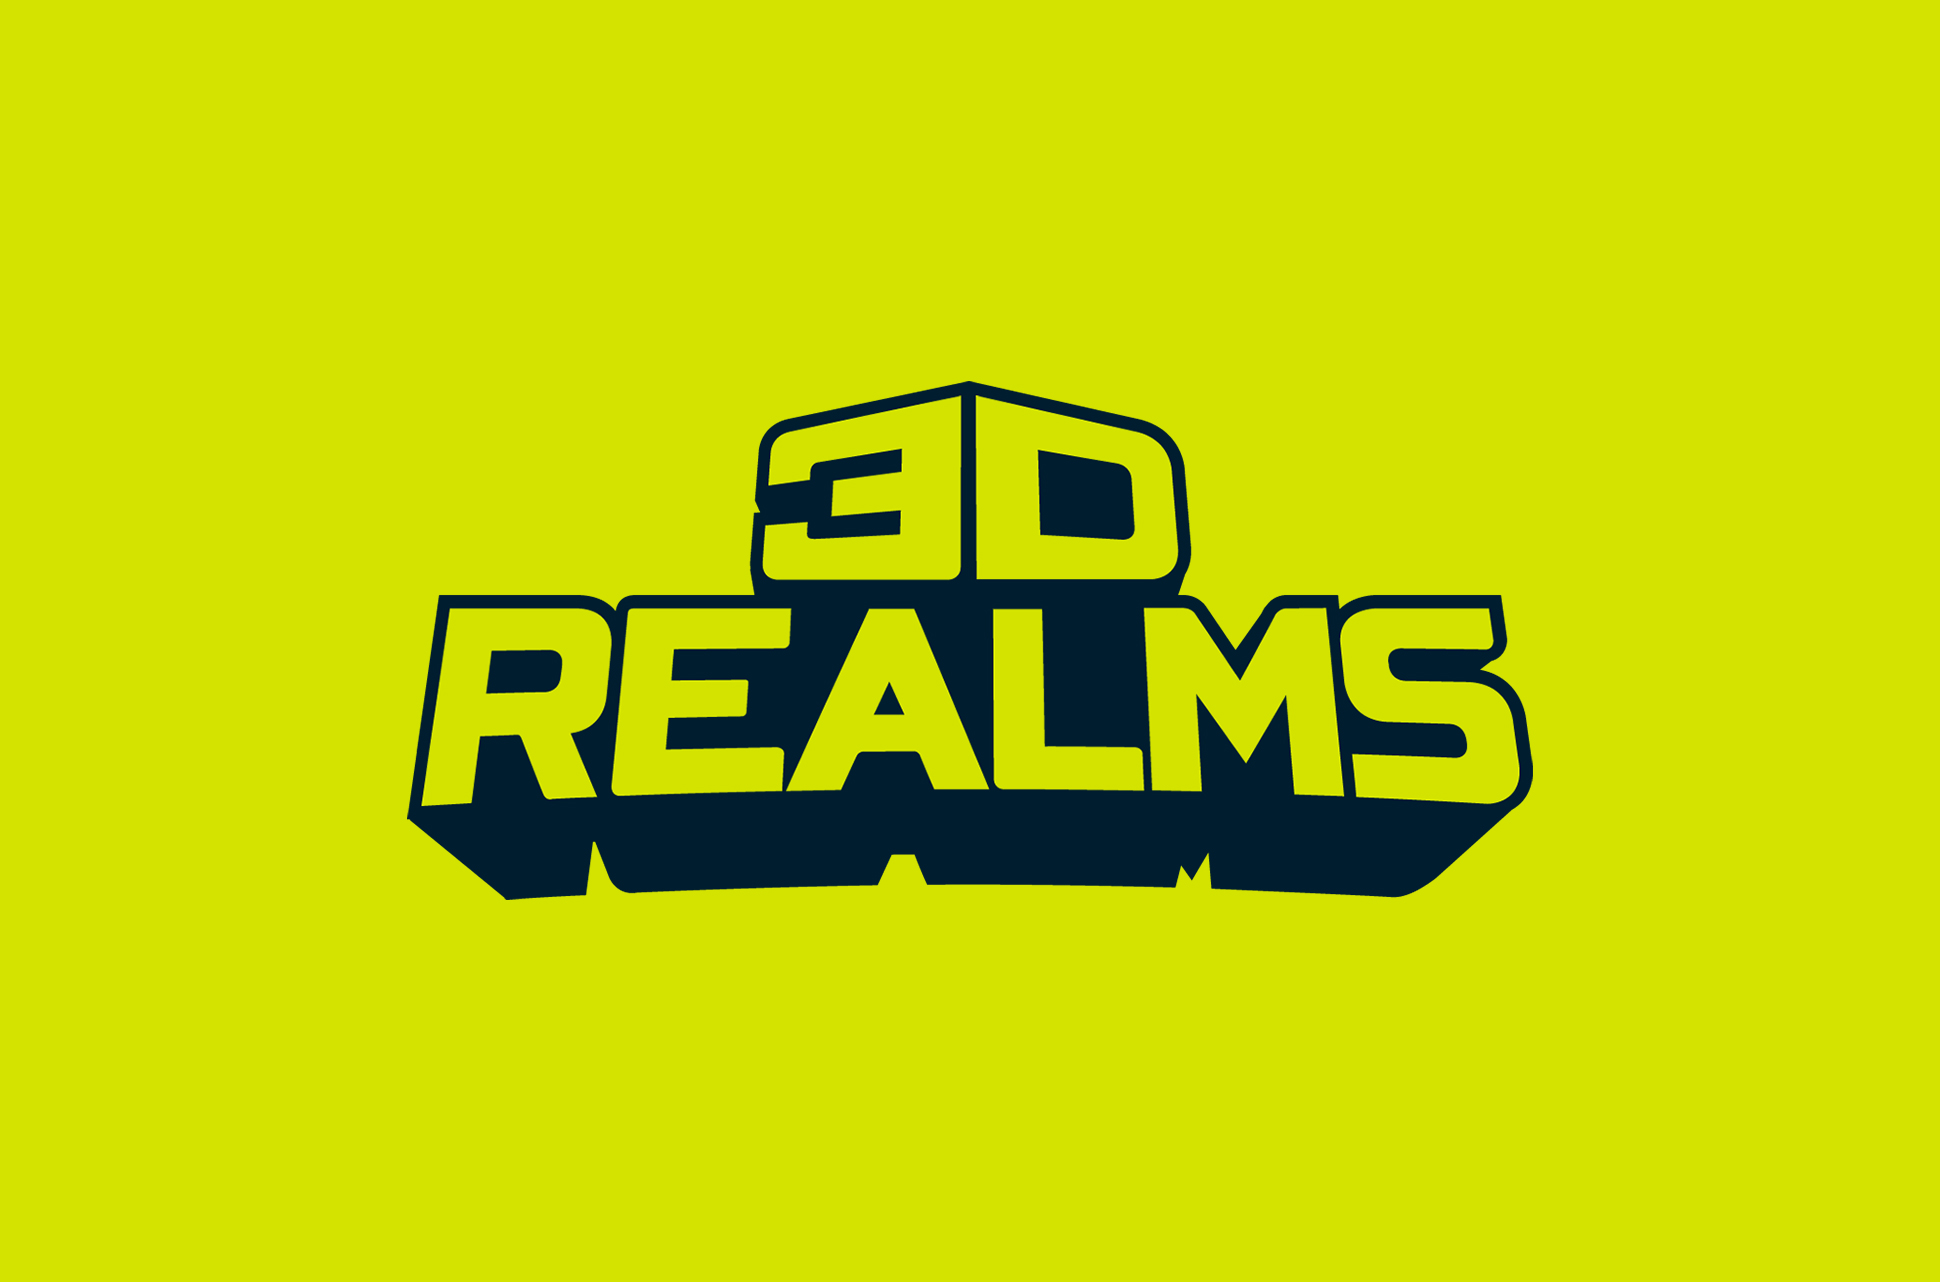 3D Realms logo.